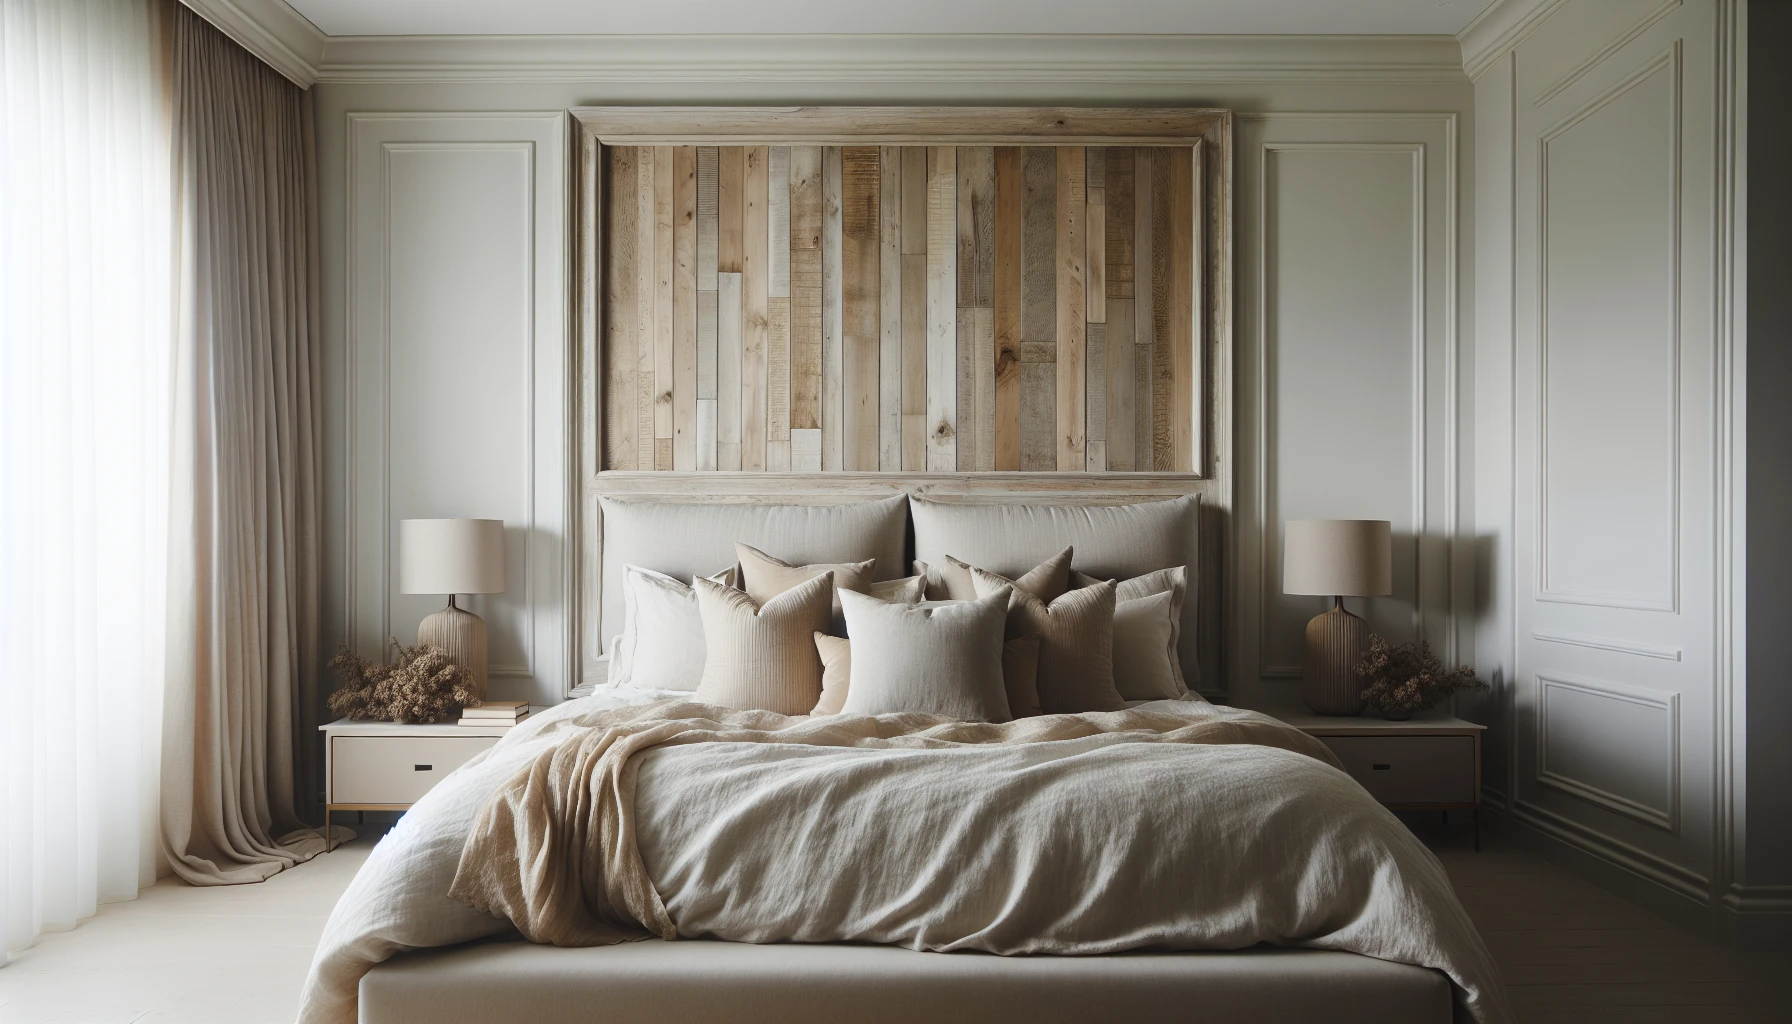 10 Amazing Neutral Master Bedroom Ideas to Create a Serene Retreat ... - 9a2ac3c8 2a12 4b6c 9c5a 508D622DDa40